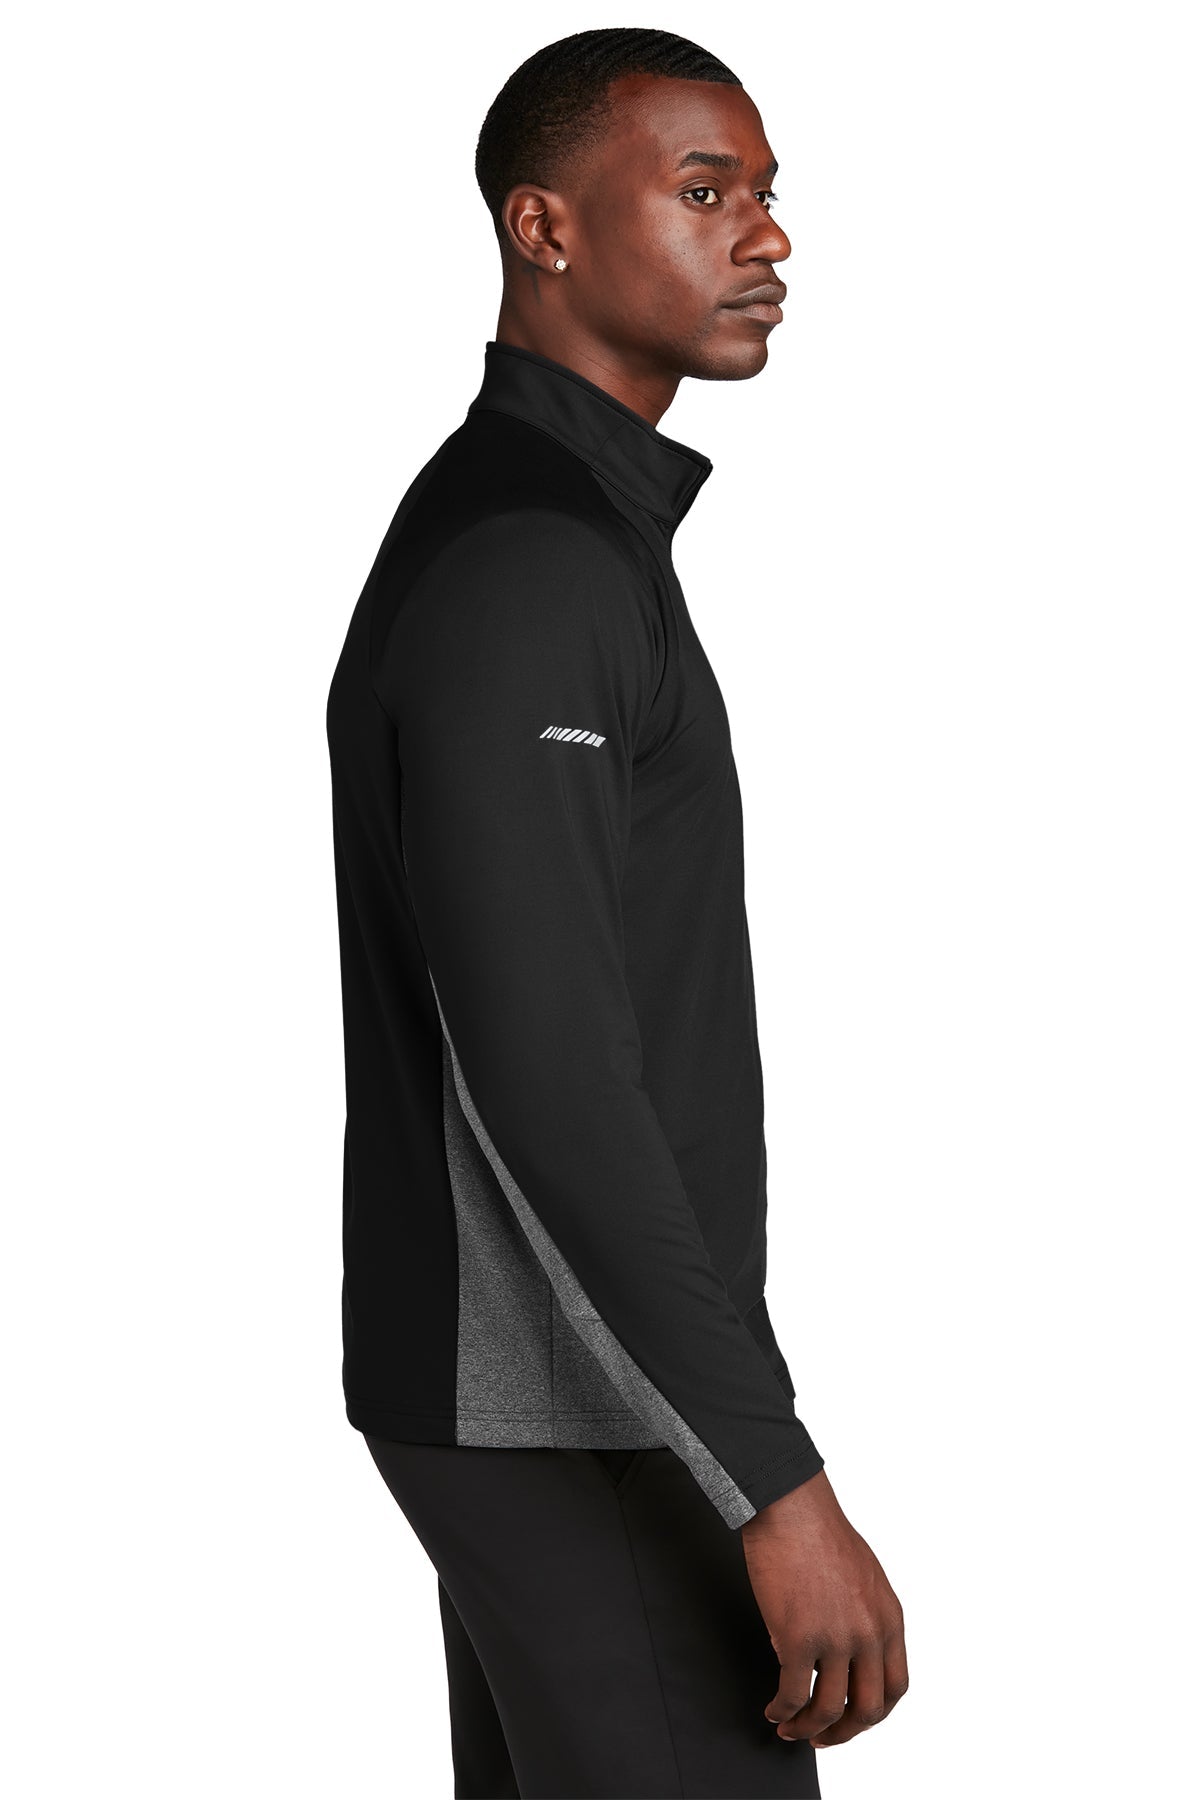 sport-tek_st854 _black/ charcoal grey heather_company_logo_sweatshirts